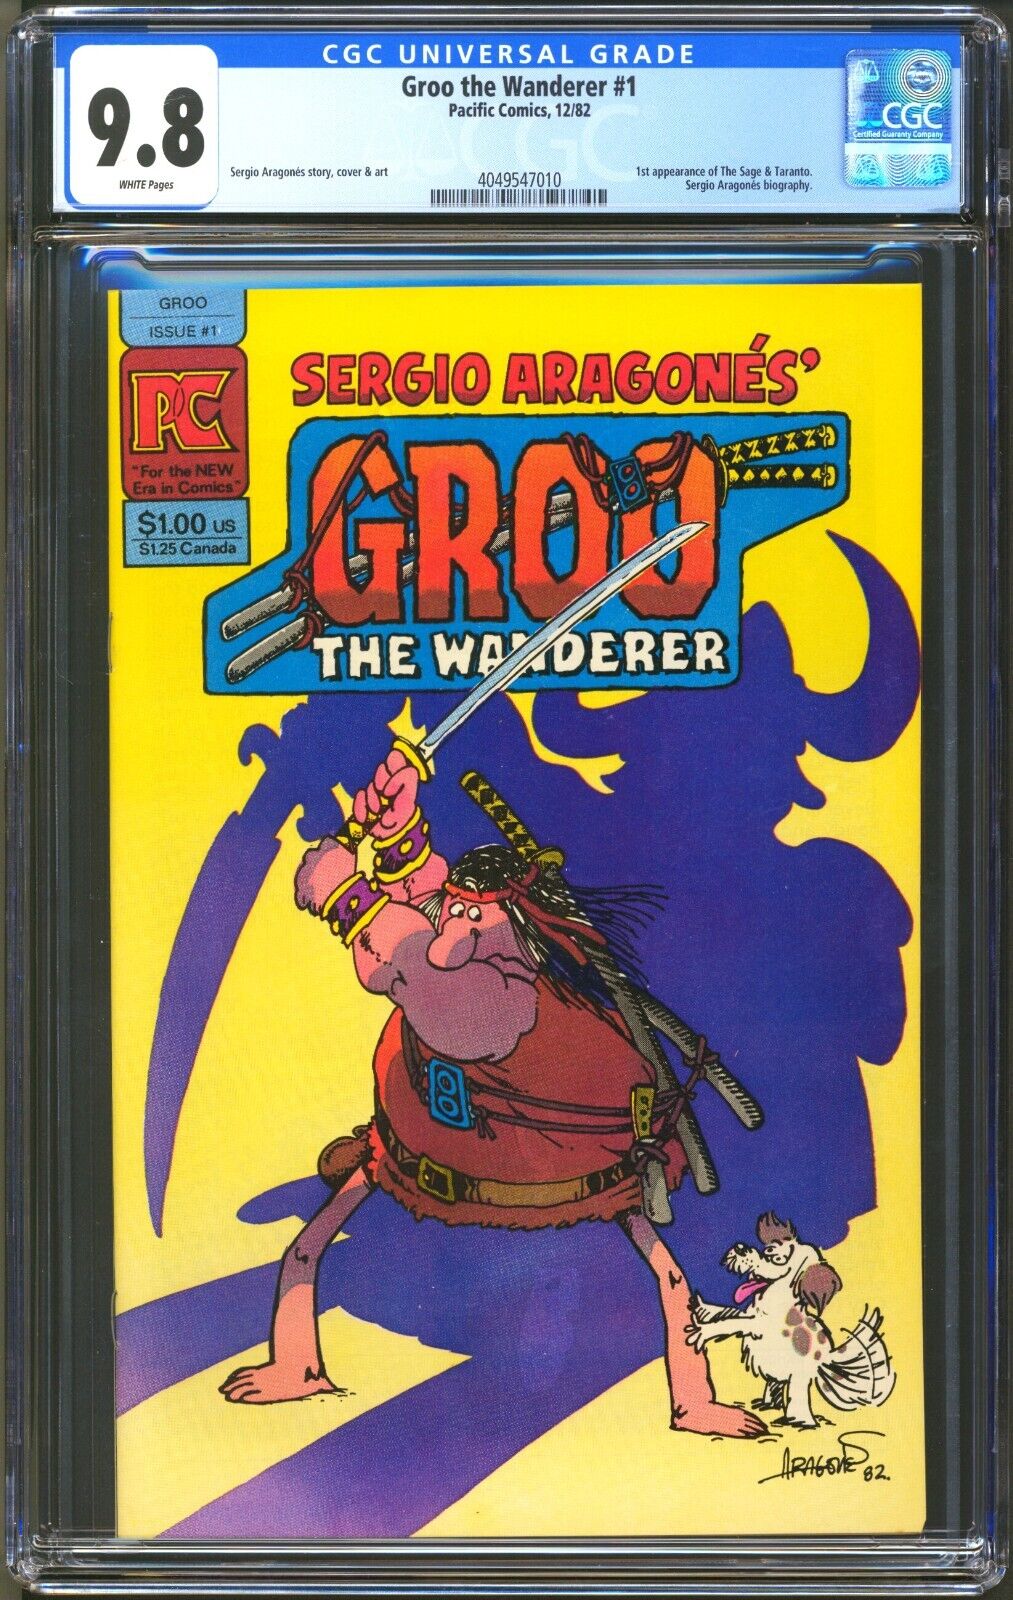 PACIFIC COMICS GROO THE WANDERER #1 - CGC 9.8 - WP - NM/MT SERGIO ARAGONES 1982